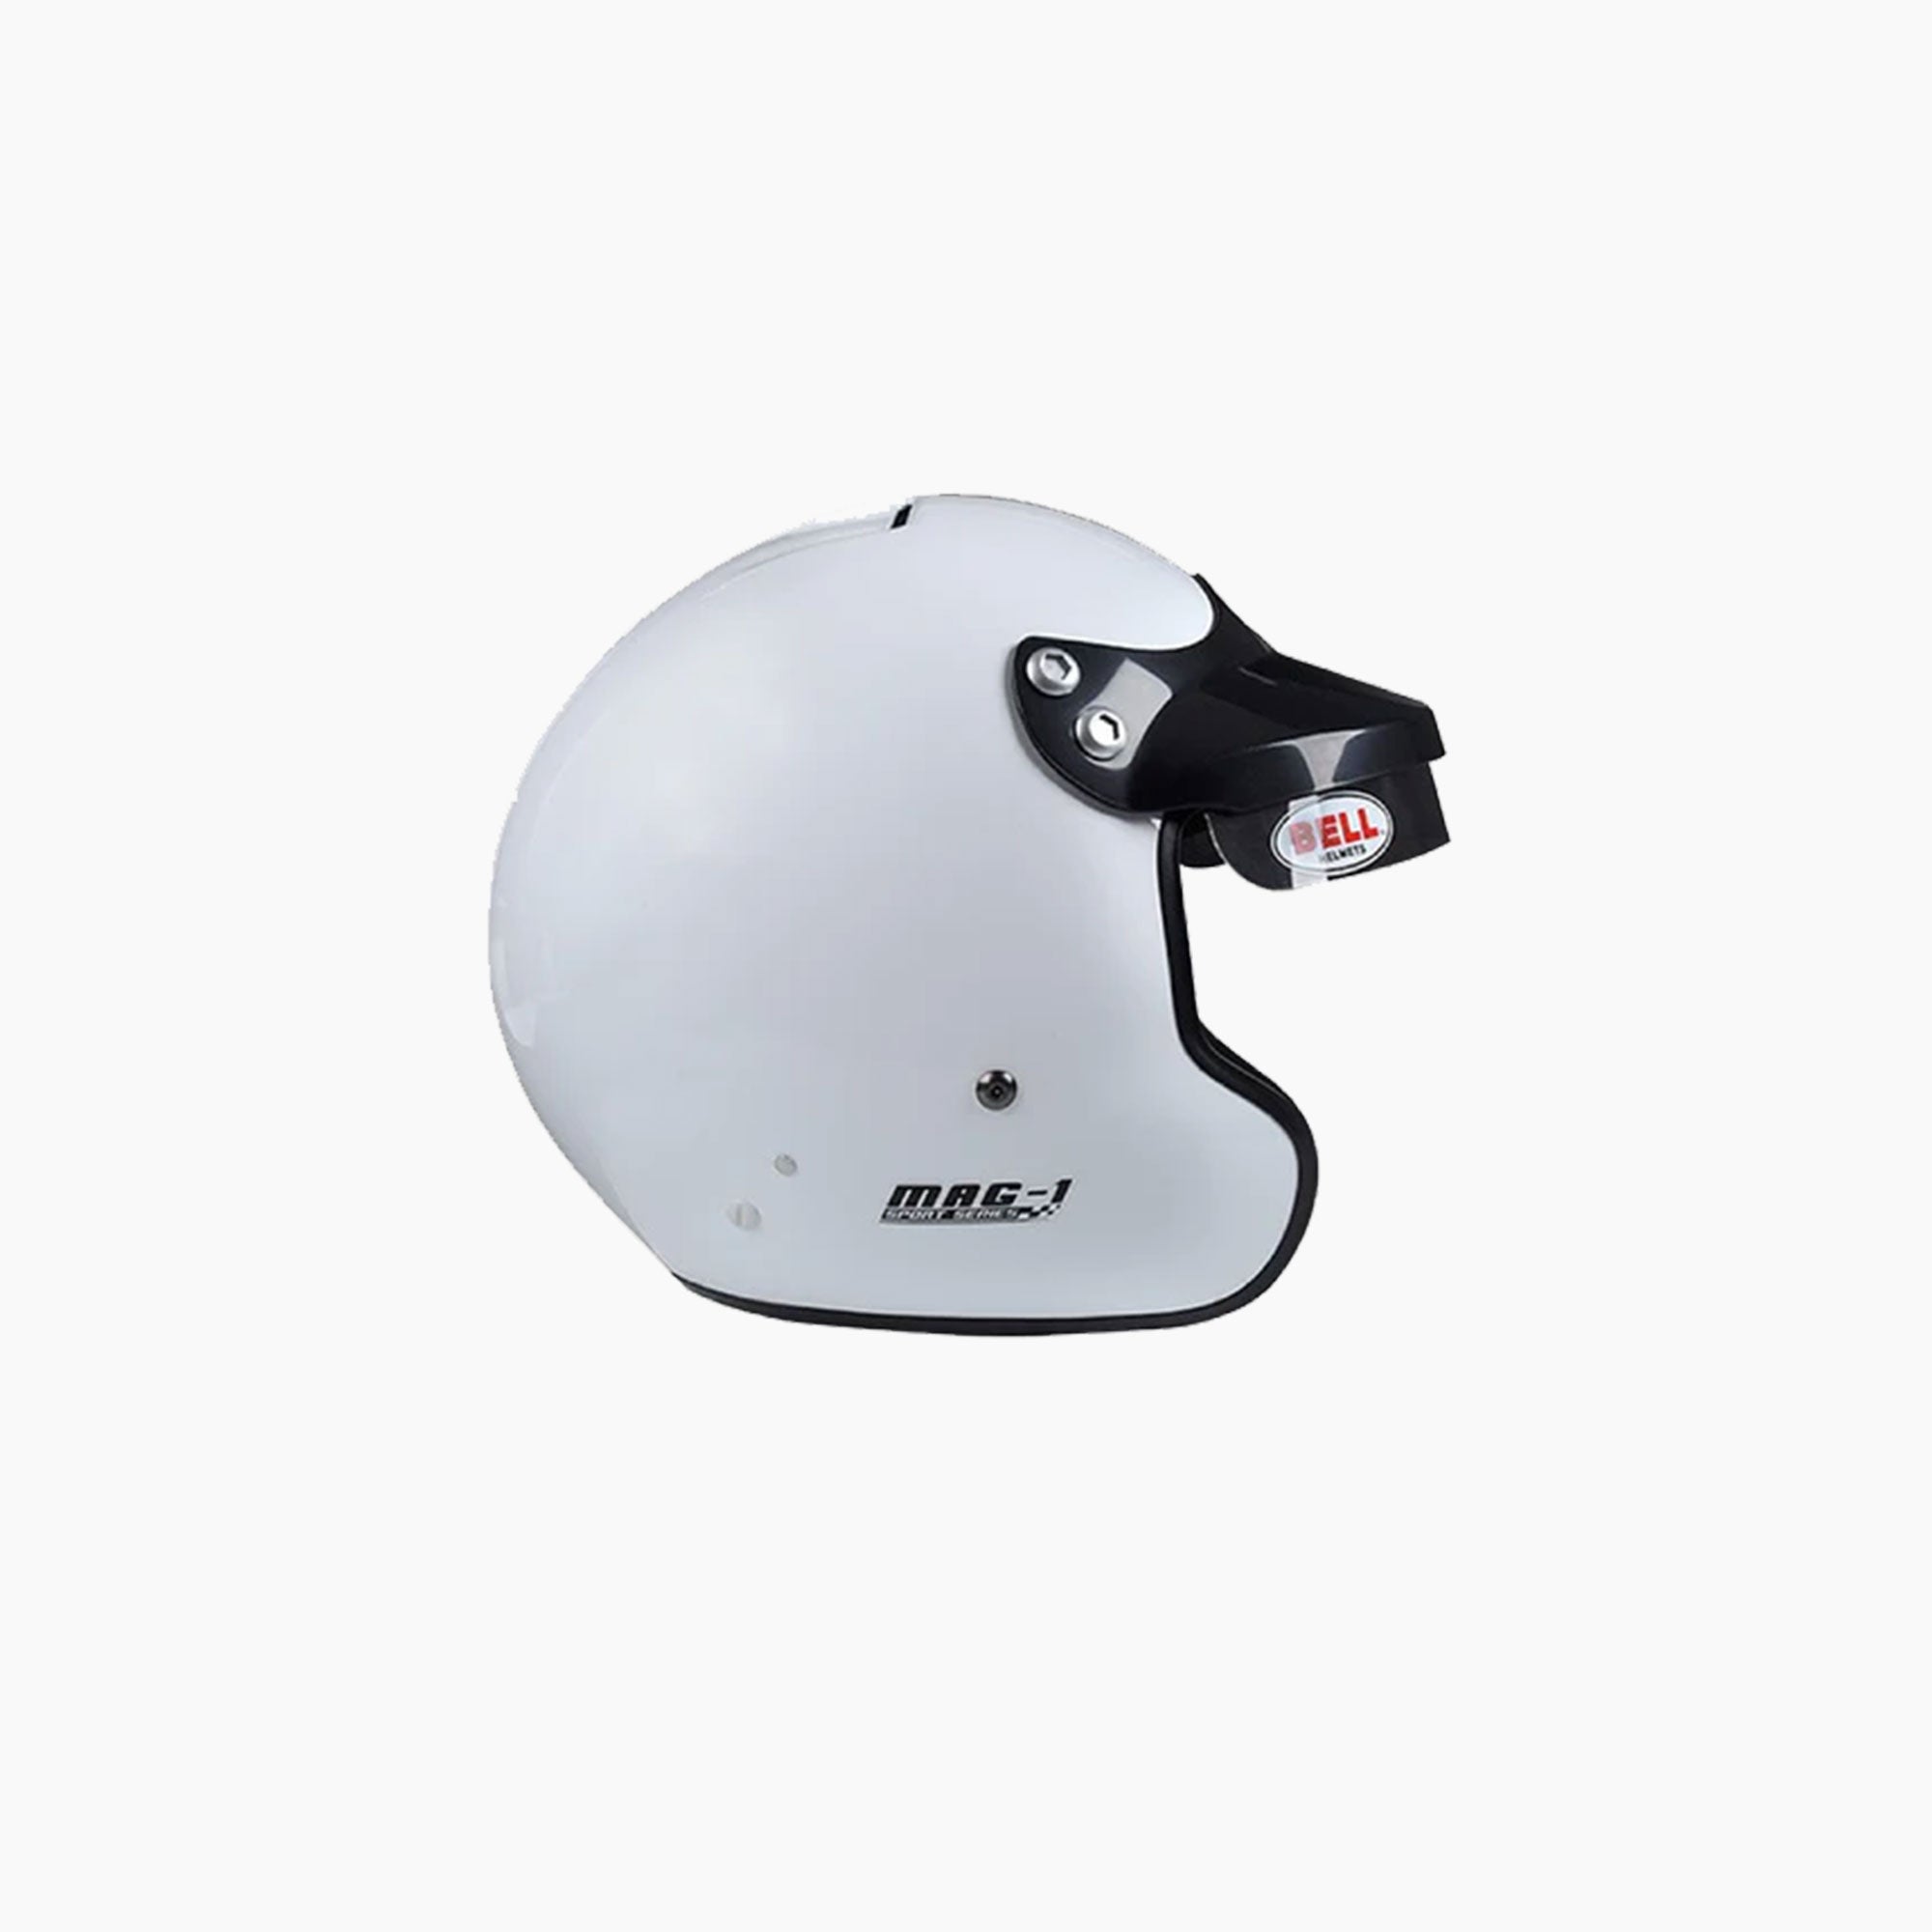 Bell Racing | MAG-1 (HANS) Racing Helmet-Racing Helmet-Bell Racing-gpx-store